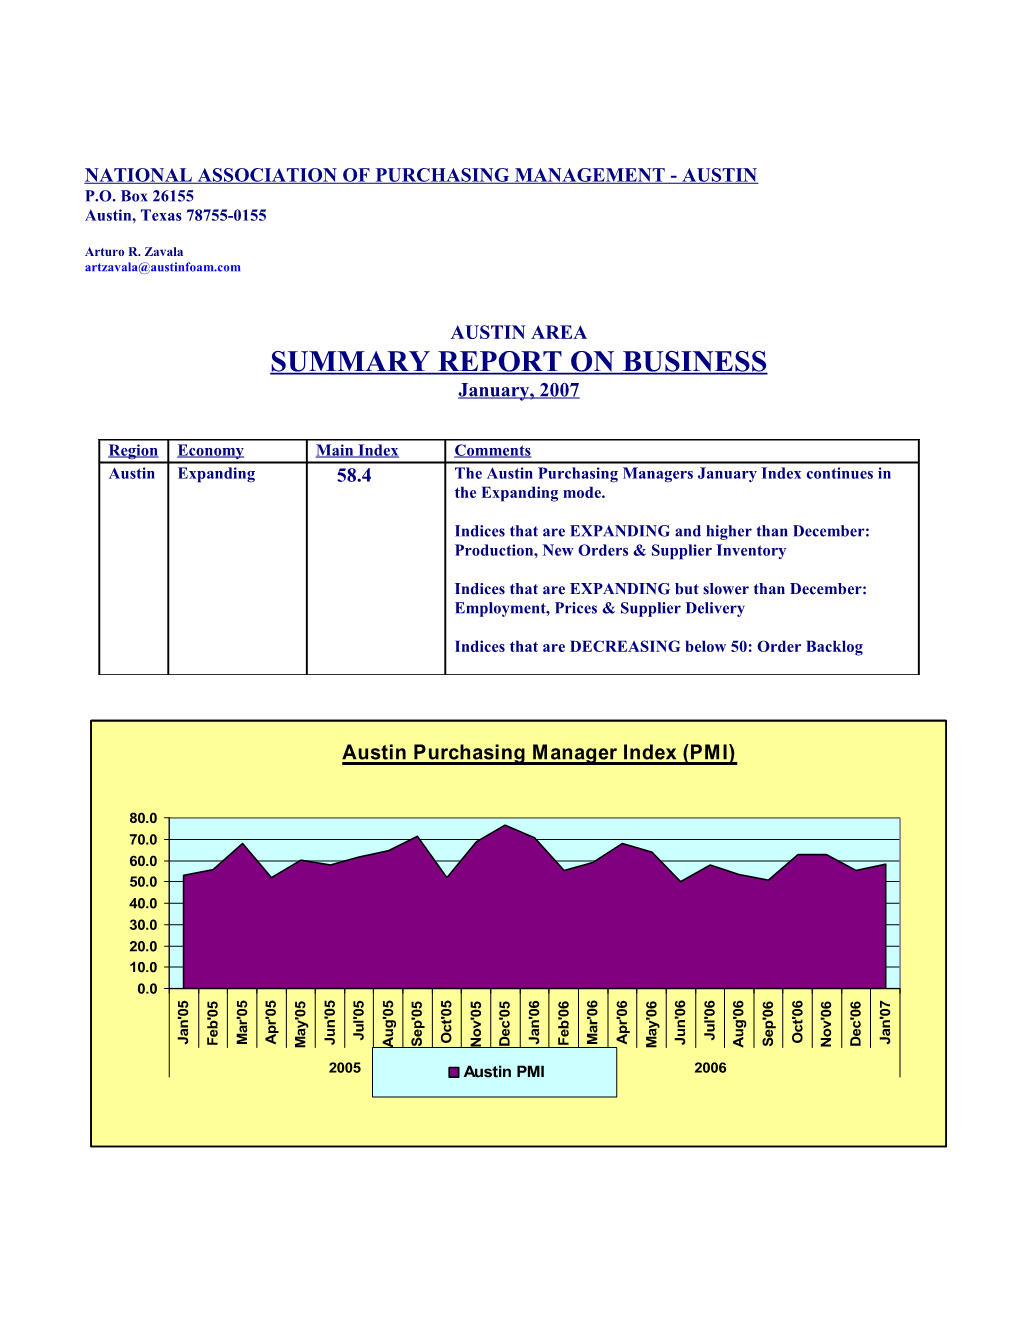 Austin Area Summary Report on Business January 2007